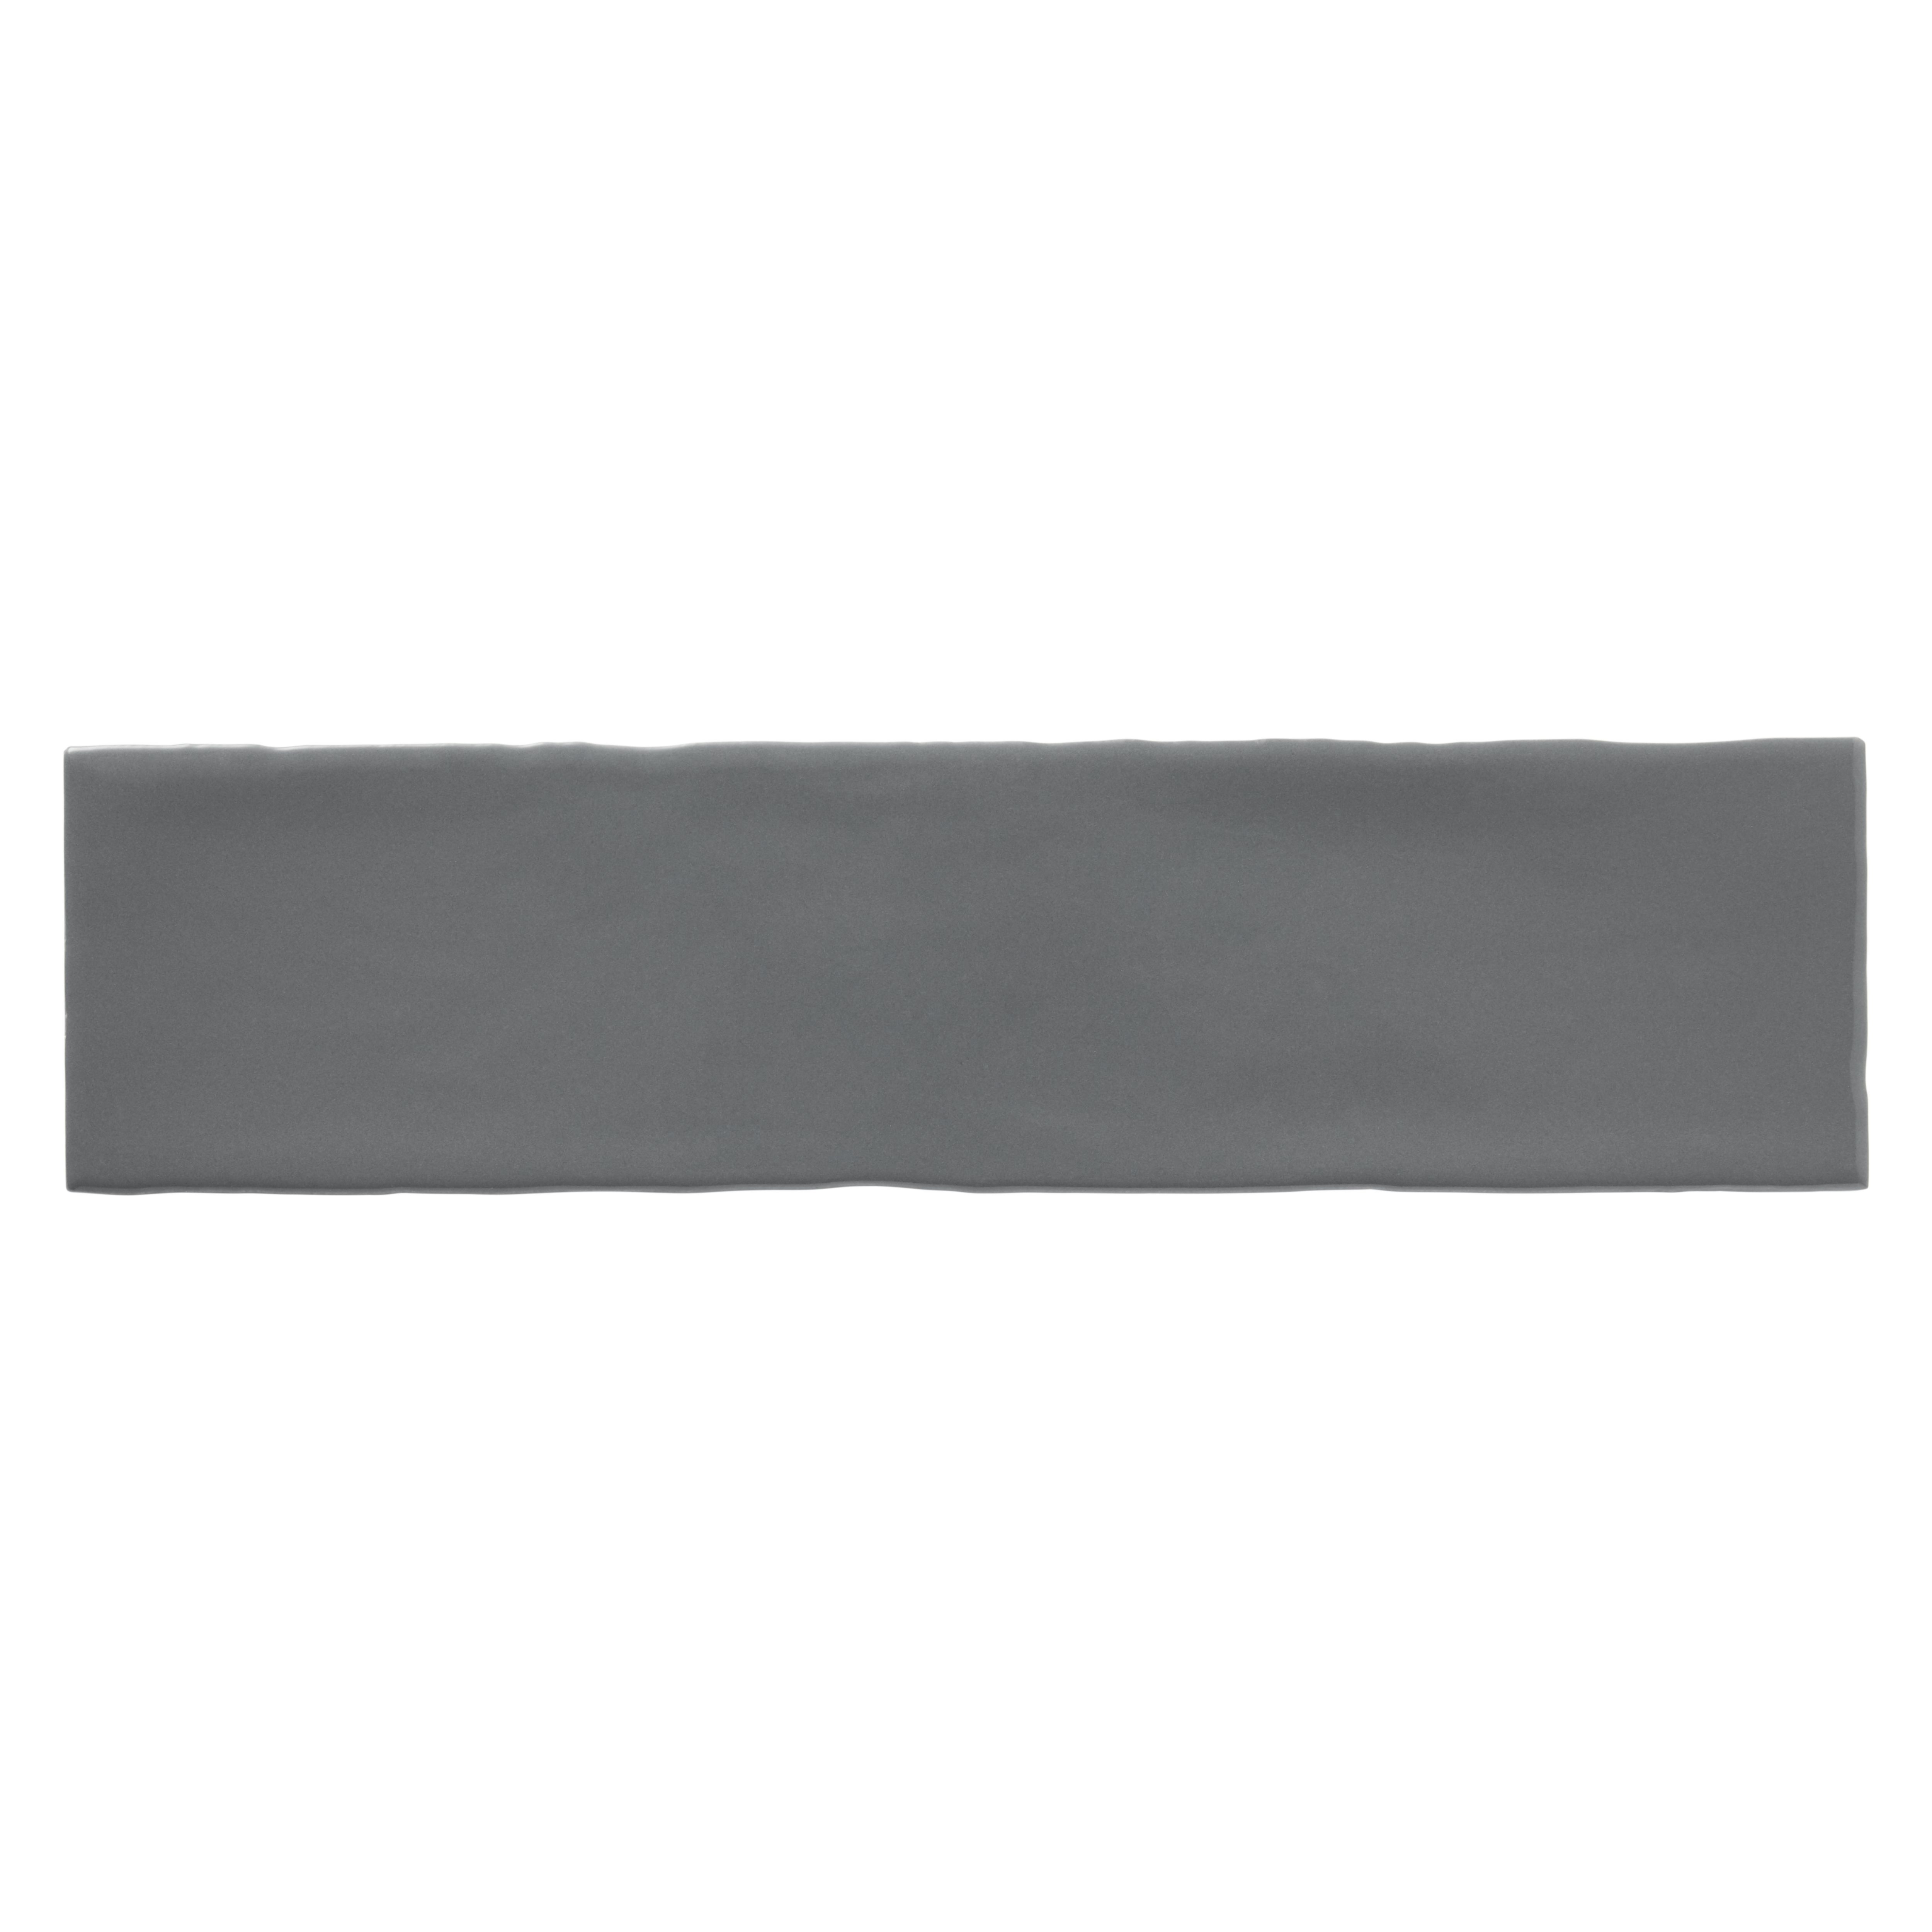 Vernisse Grey Gloss Plain Ceramic Wall Tile, Pack of 41, (L)301mm (W)75.4mm